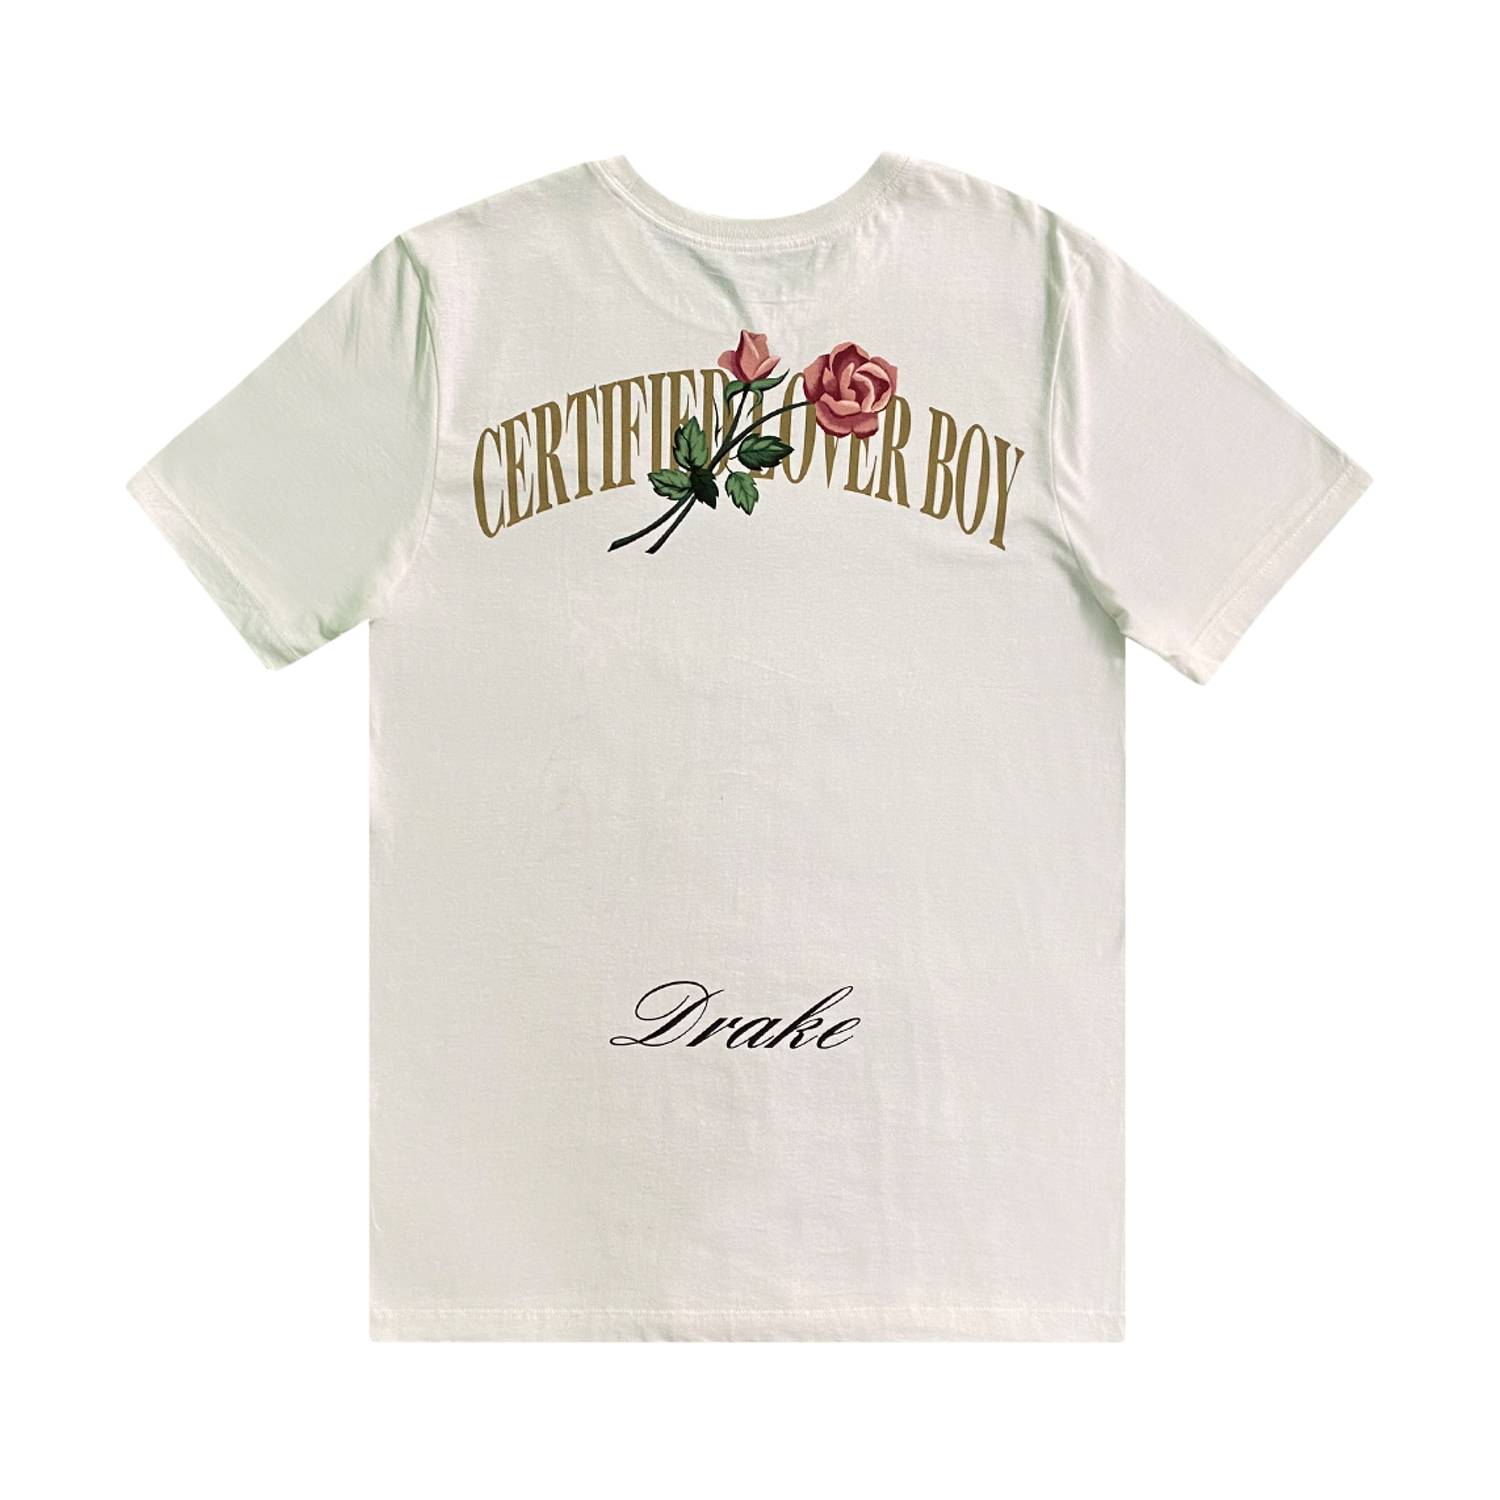 Nike Certified Lover Boy Rose T-Shirt 'White' - Nike - CLB WHT T 021 | GOAT